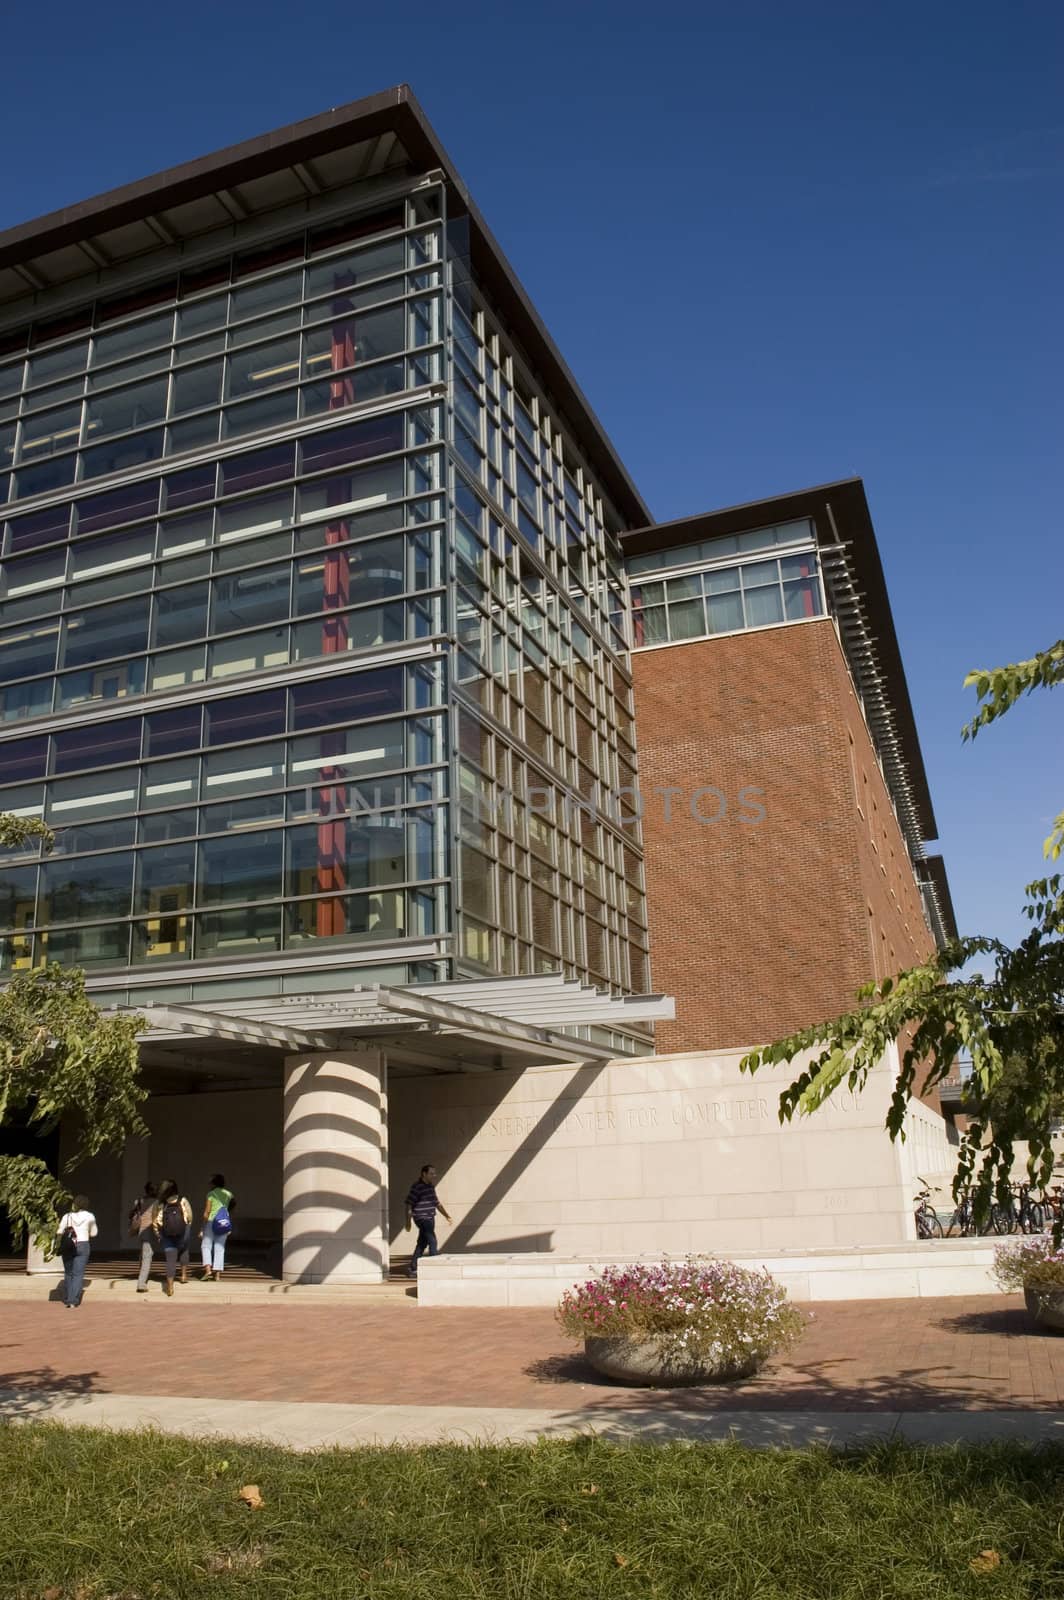 University of Illinois in Champaign - Siebel Center.